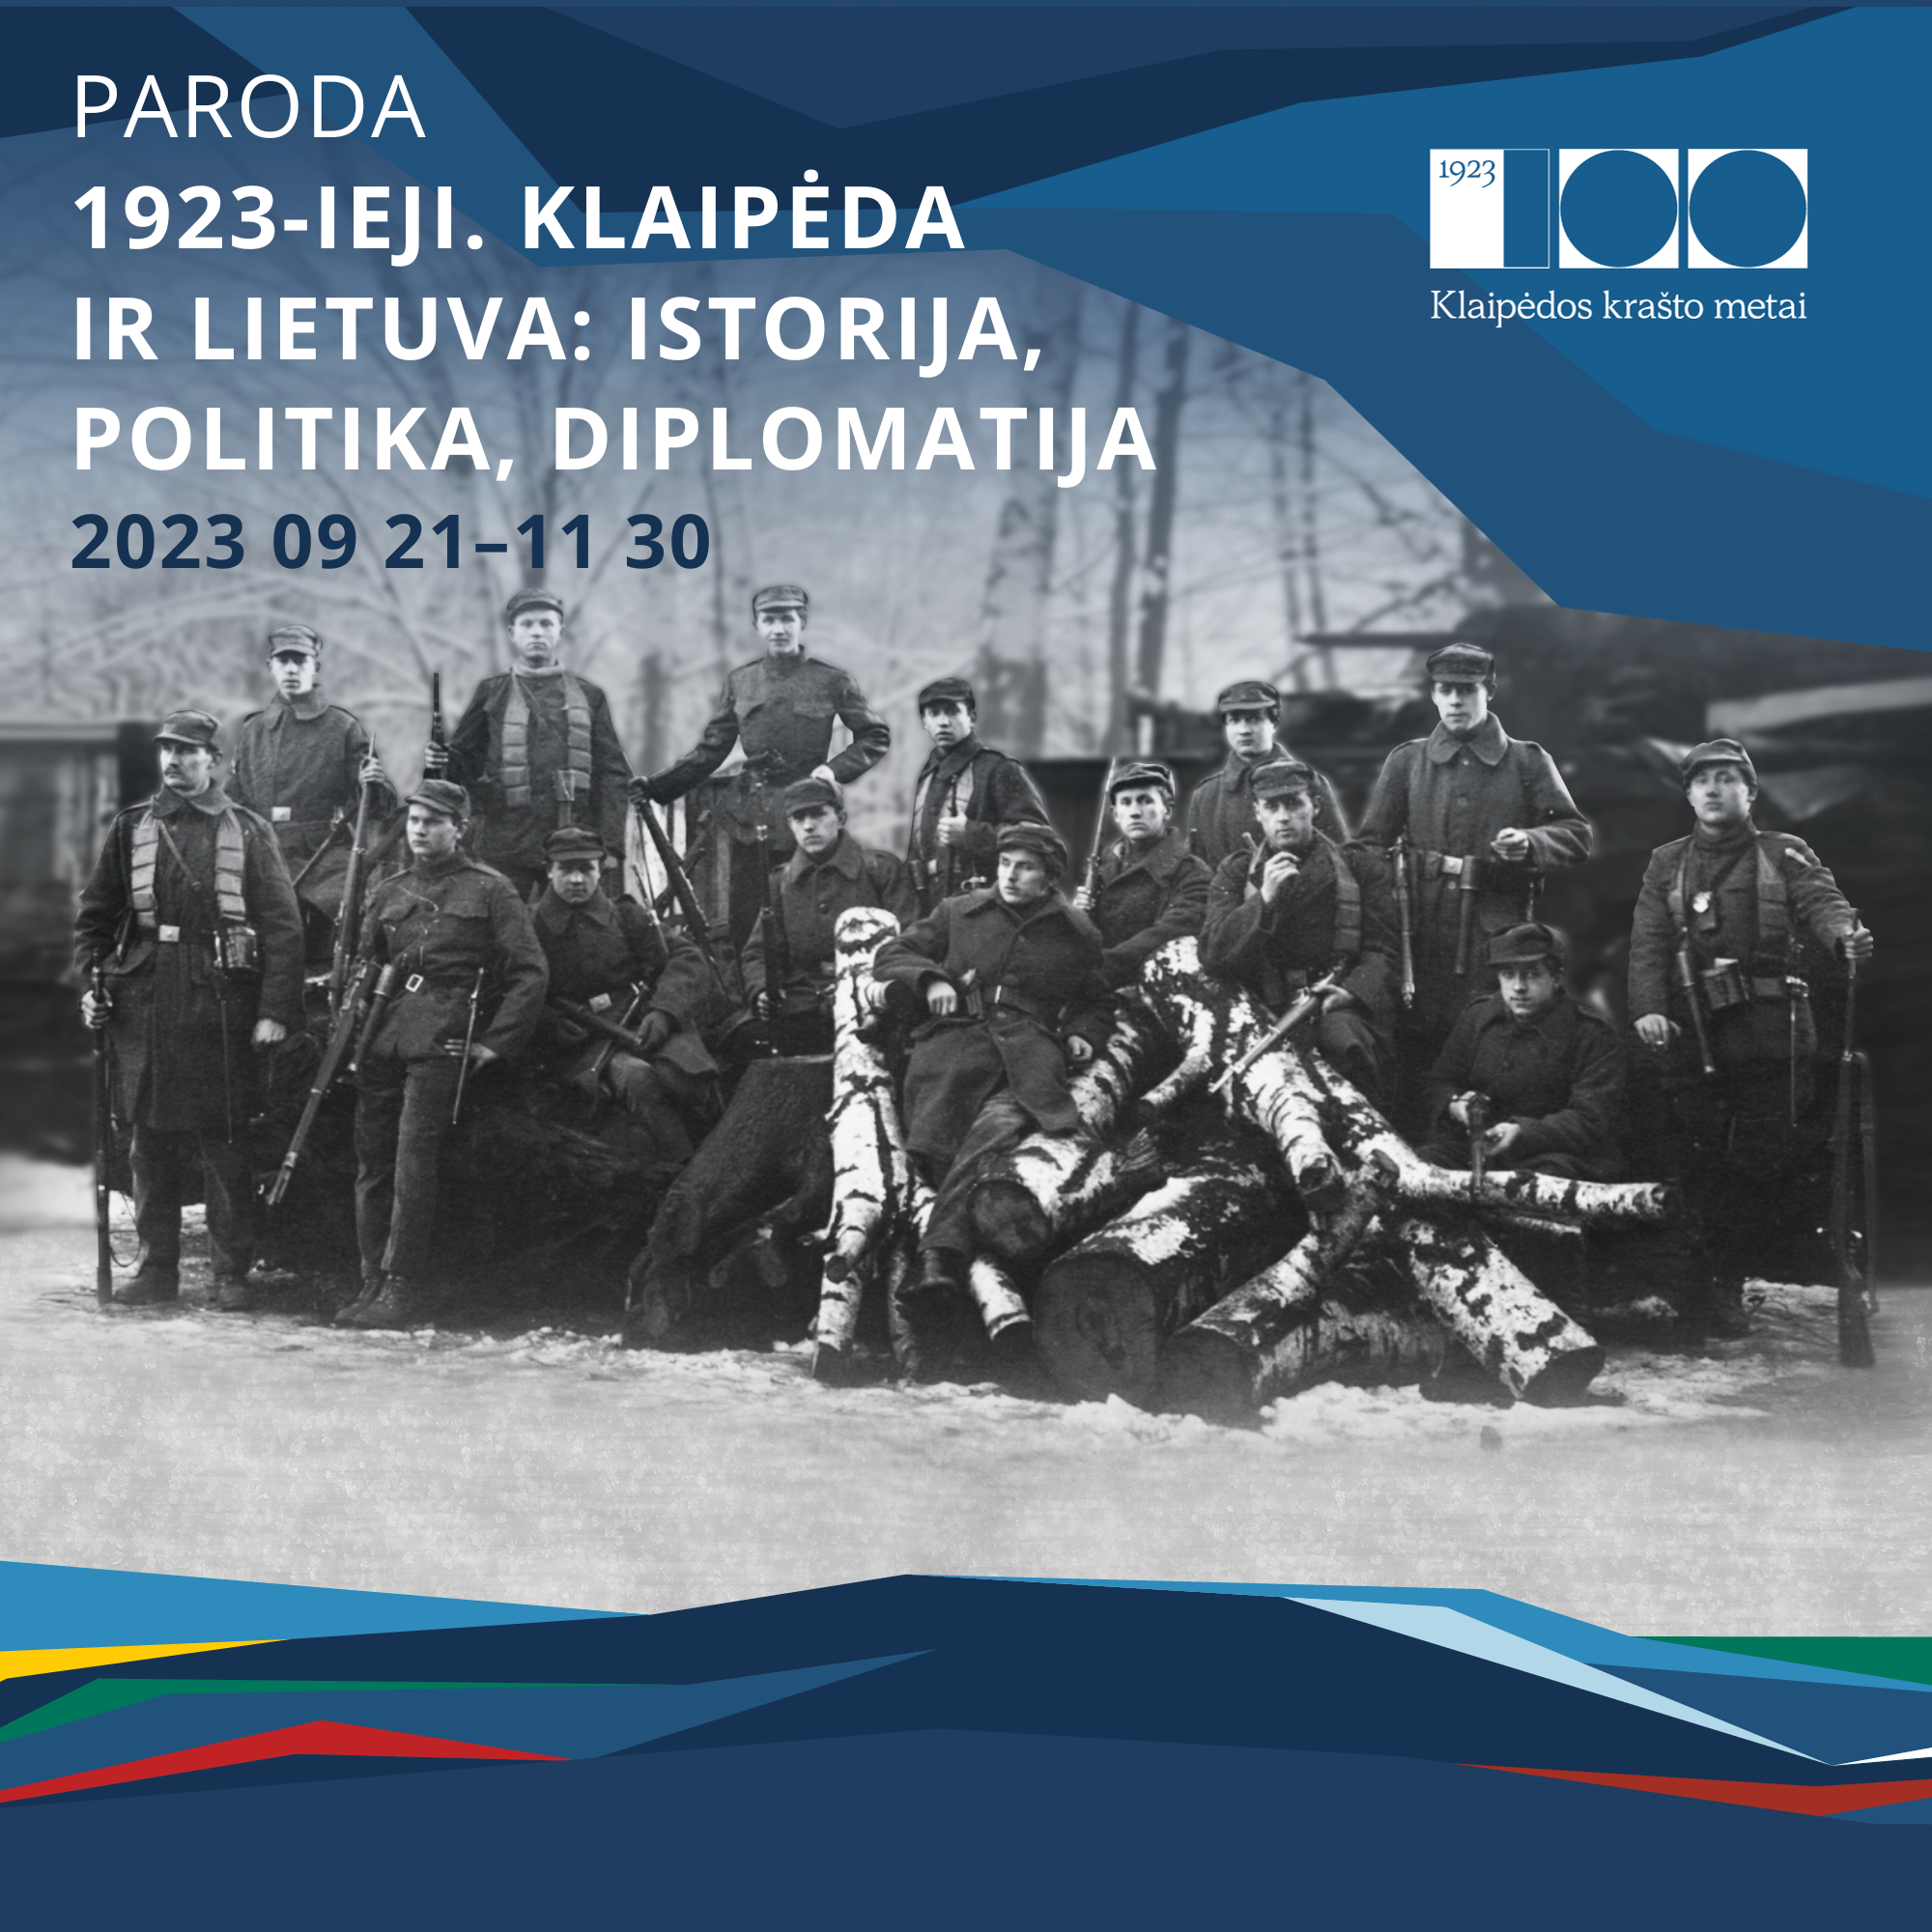 t1923-ieji-klaipeda-ir-lietuva-istorija-politika-diplomatija-uzsklanda-002-1